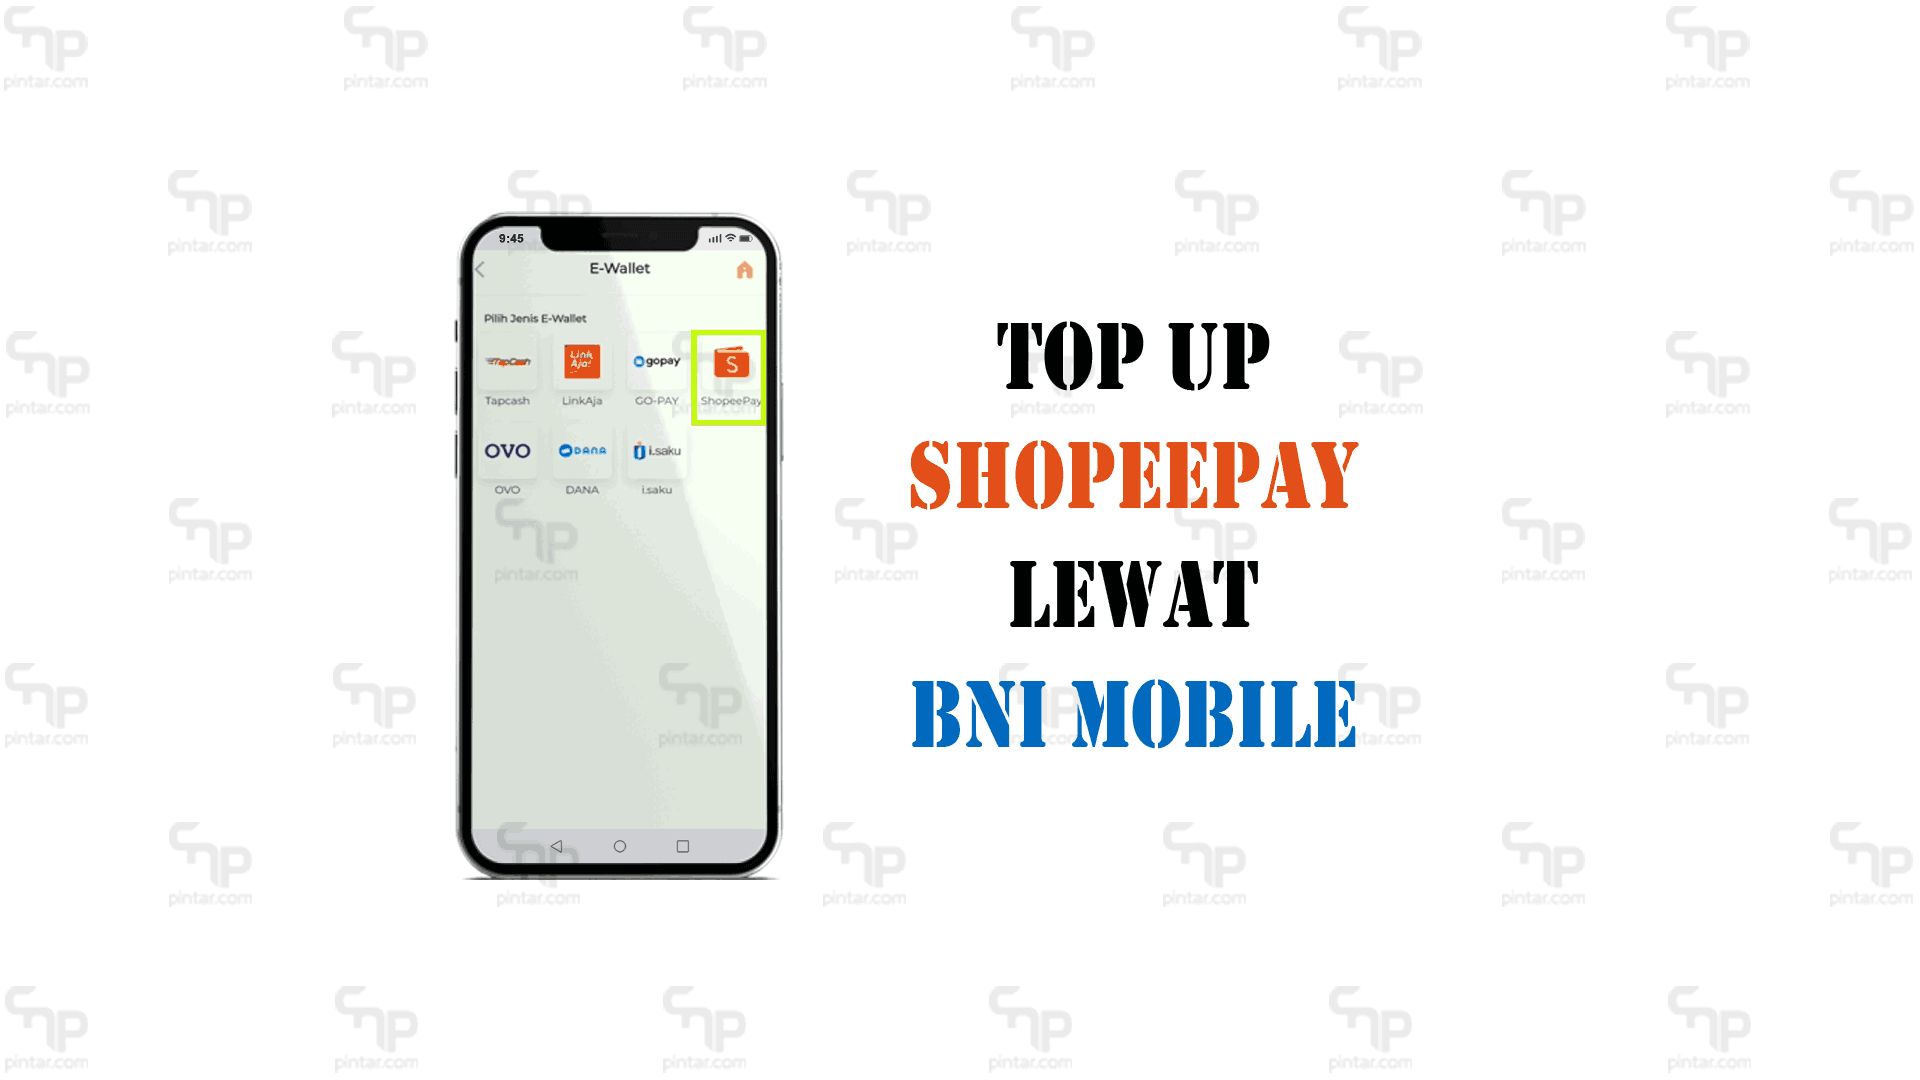 Cara-top-up-shopeepay-lewat-bni-mobile